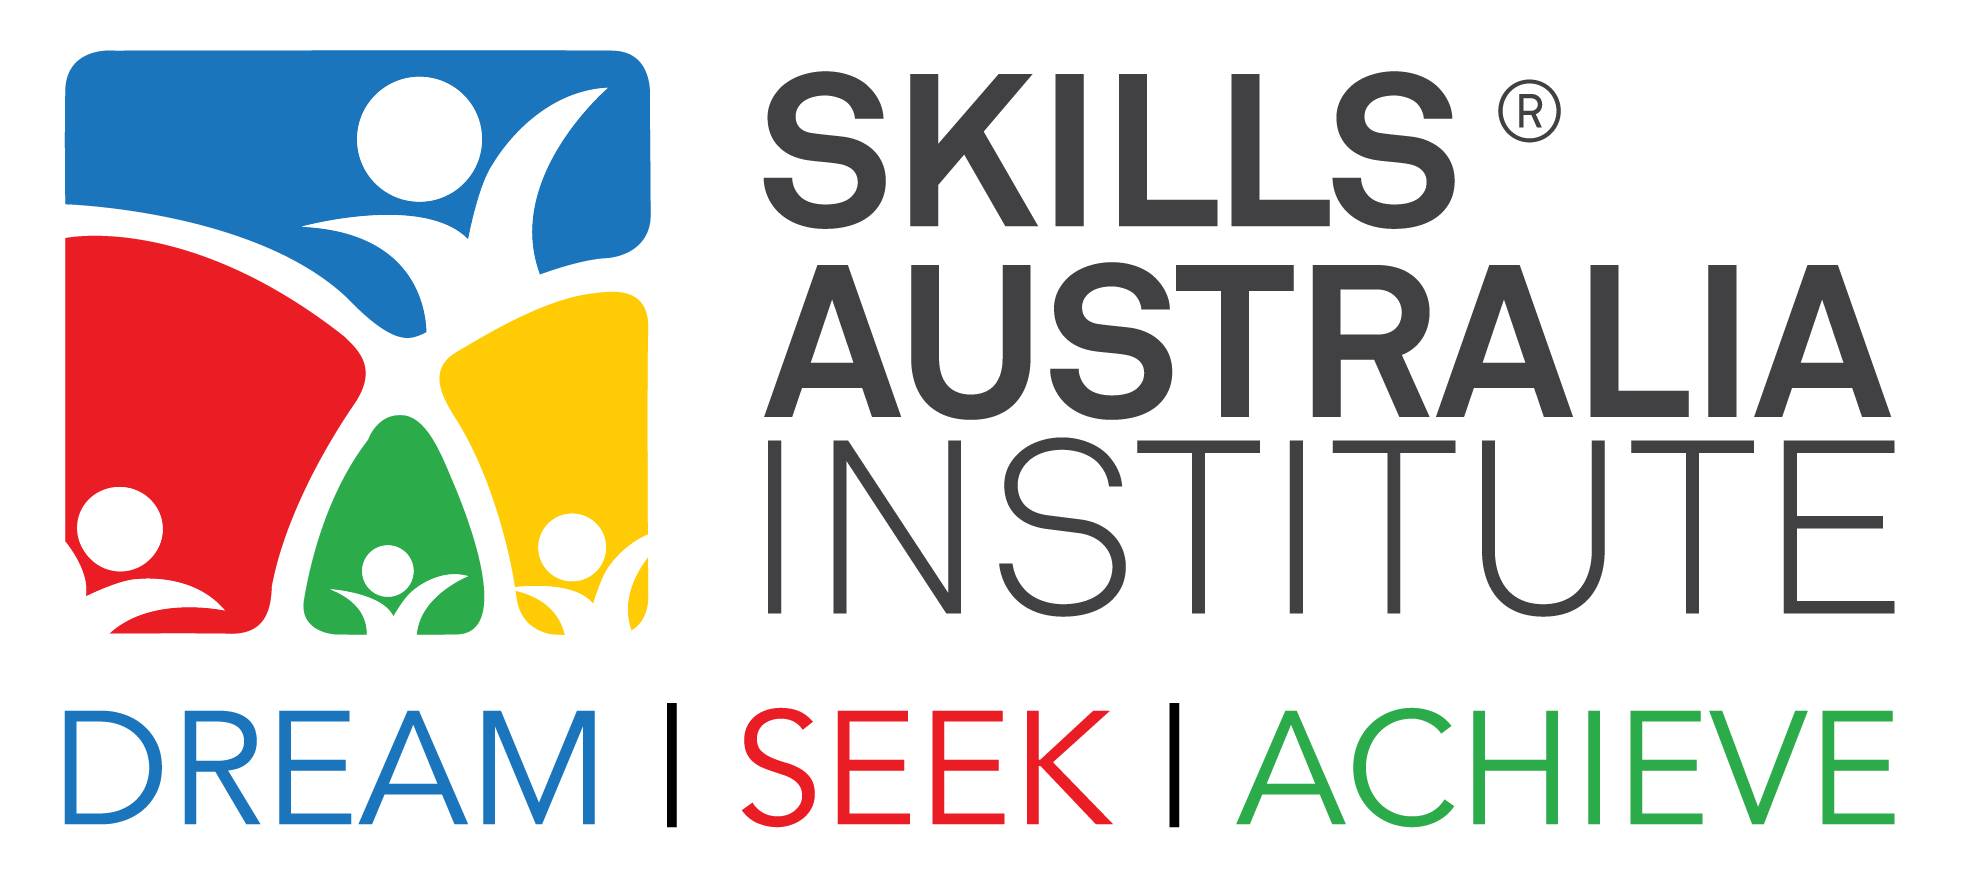 Skills Australia Institute (SAI)